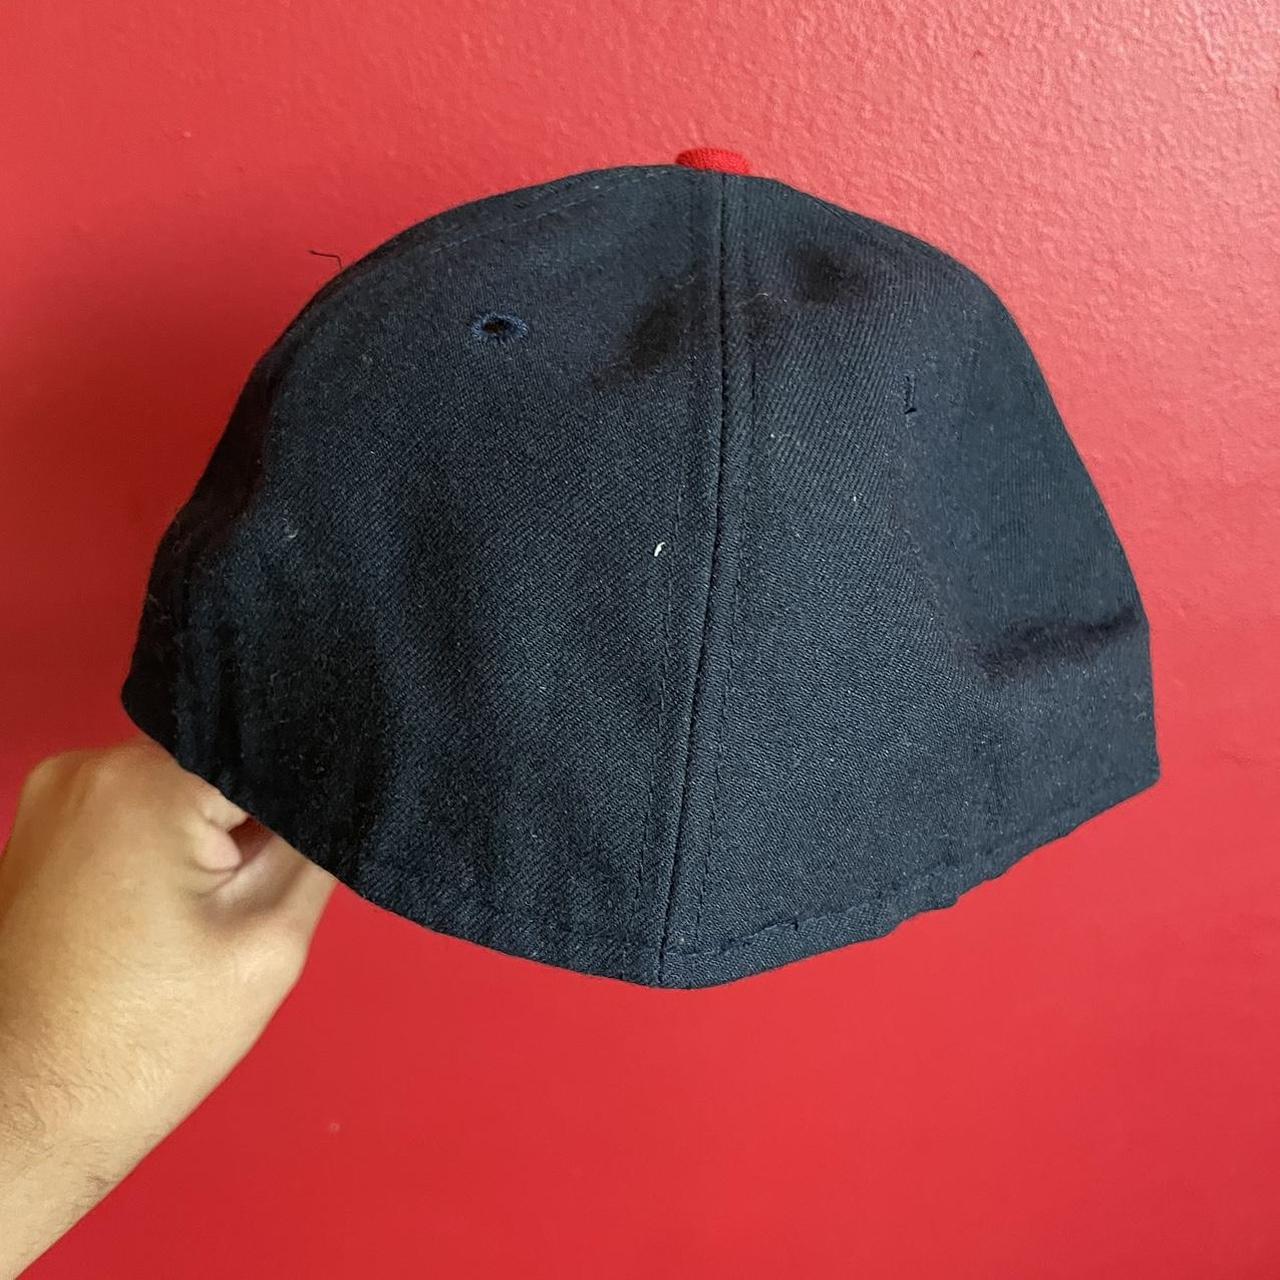 Size 7 St Louis Cardinals fitted hat. Pro Image - Depop